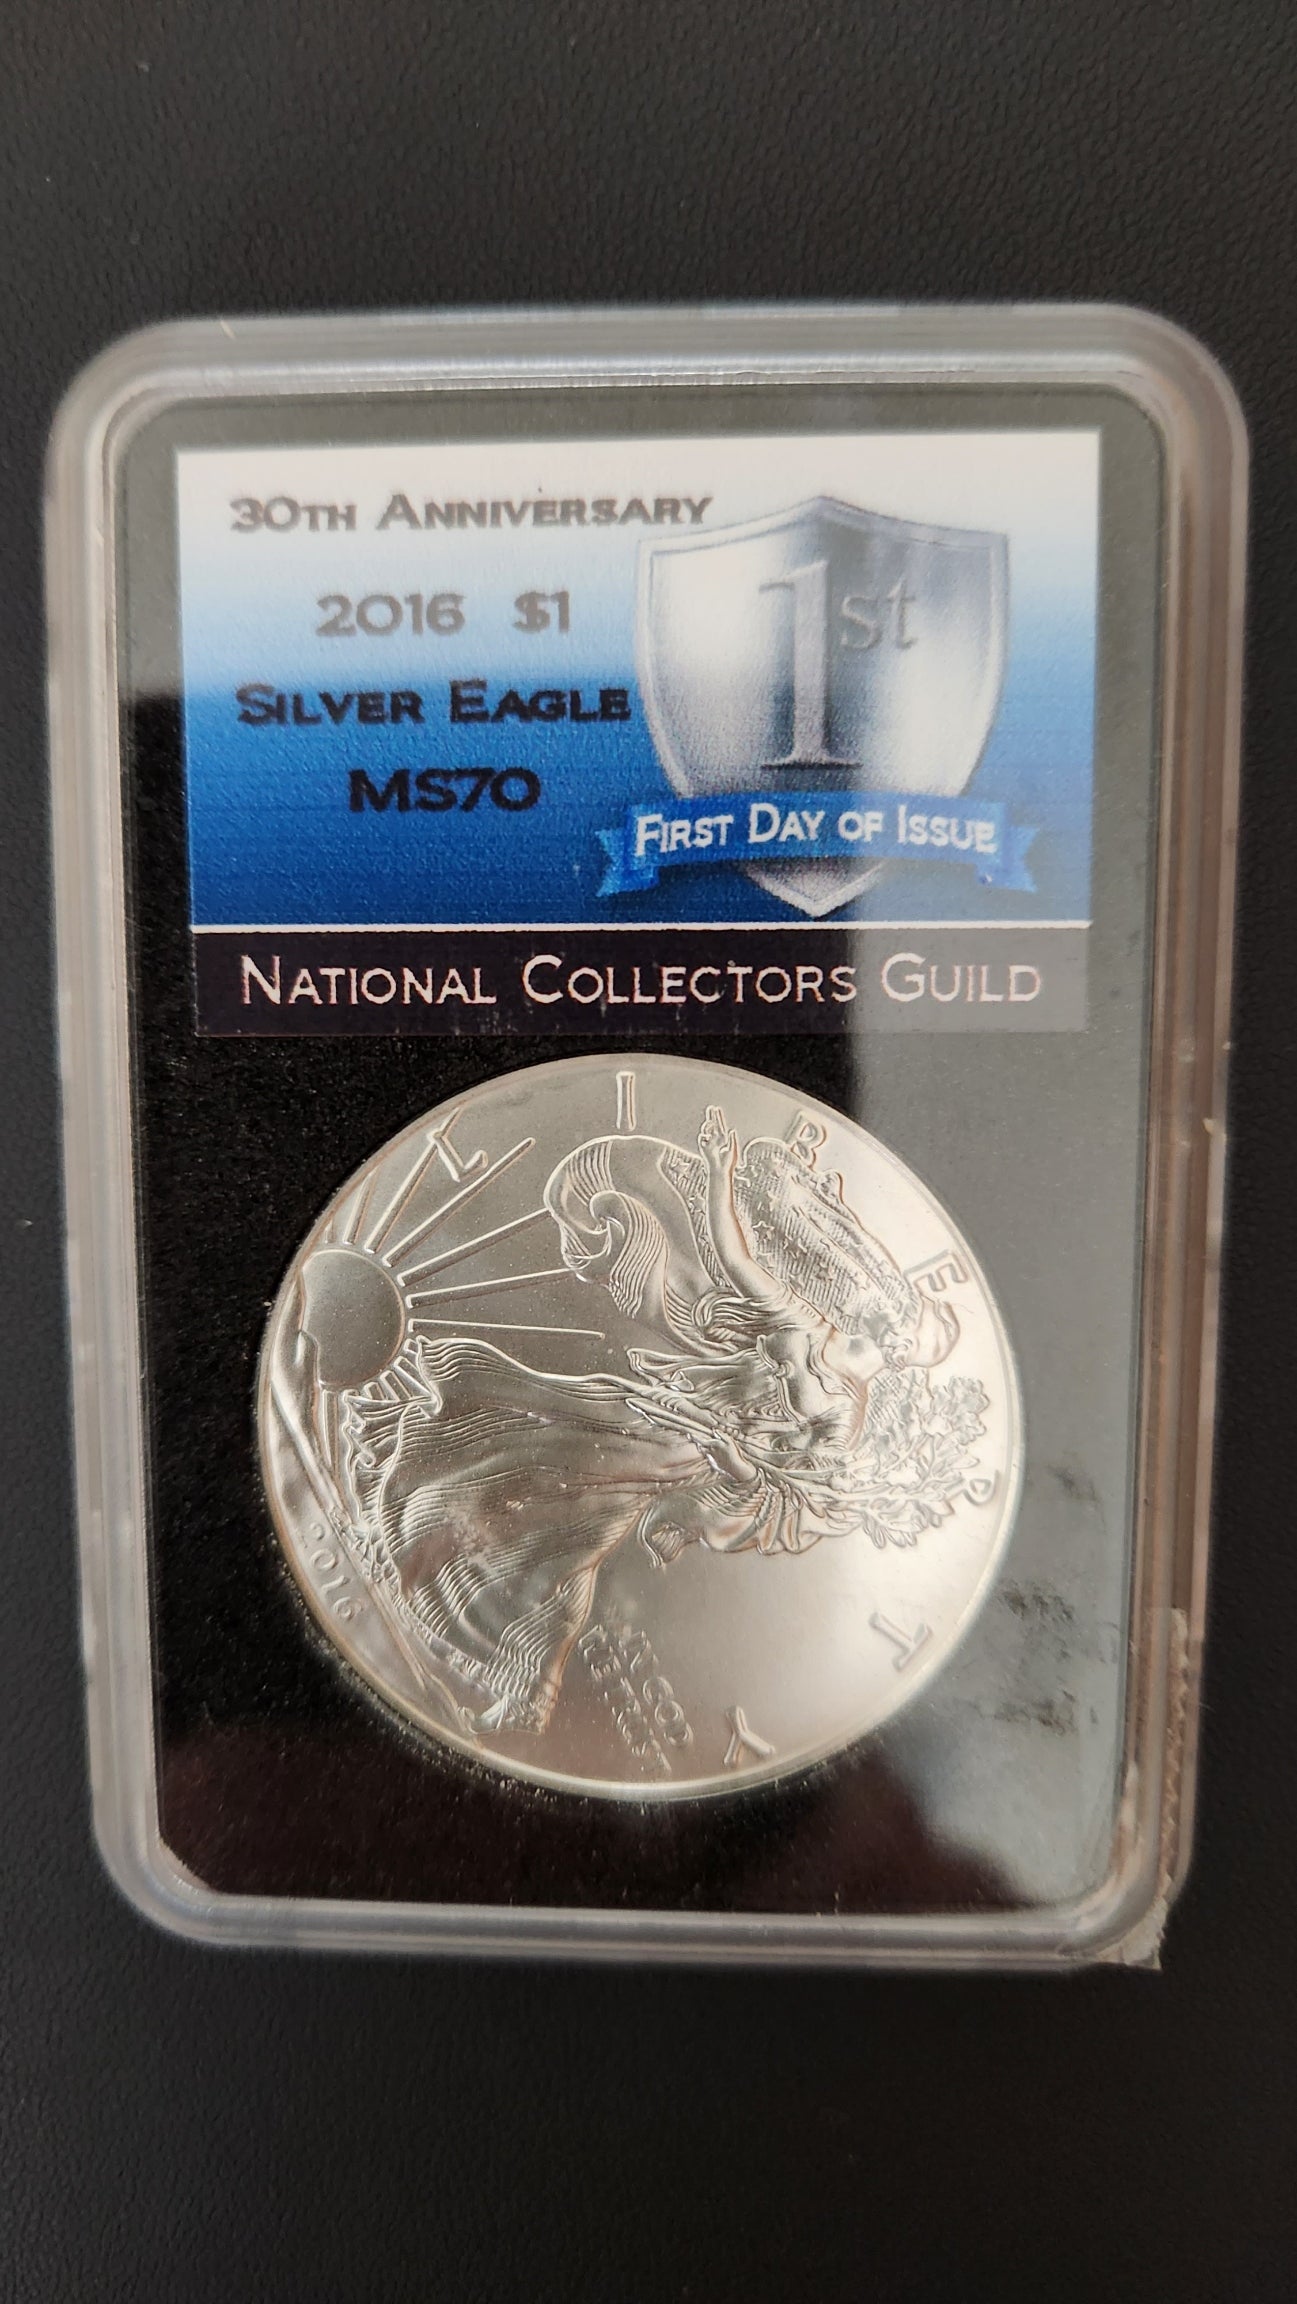 2016 Silver Eagle - 30th Anniversary - NCG MS70